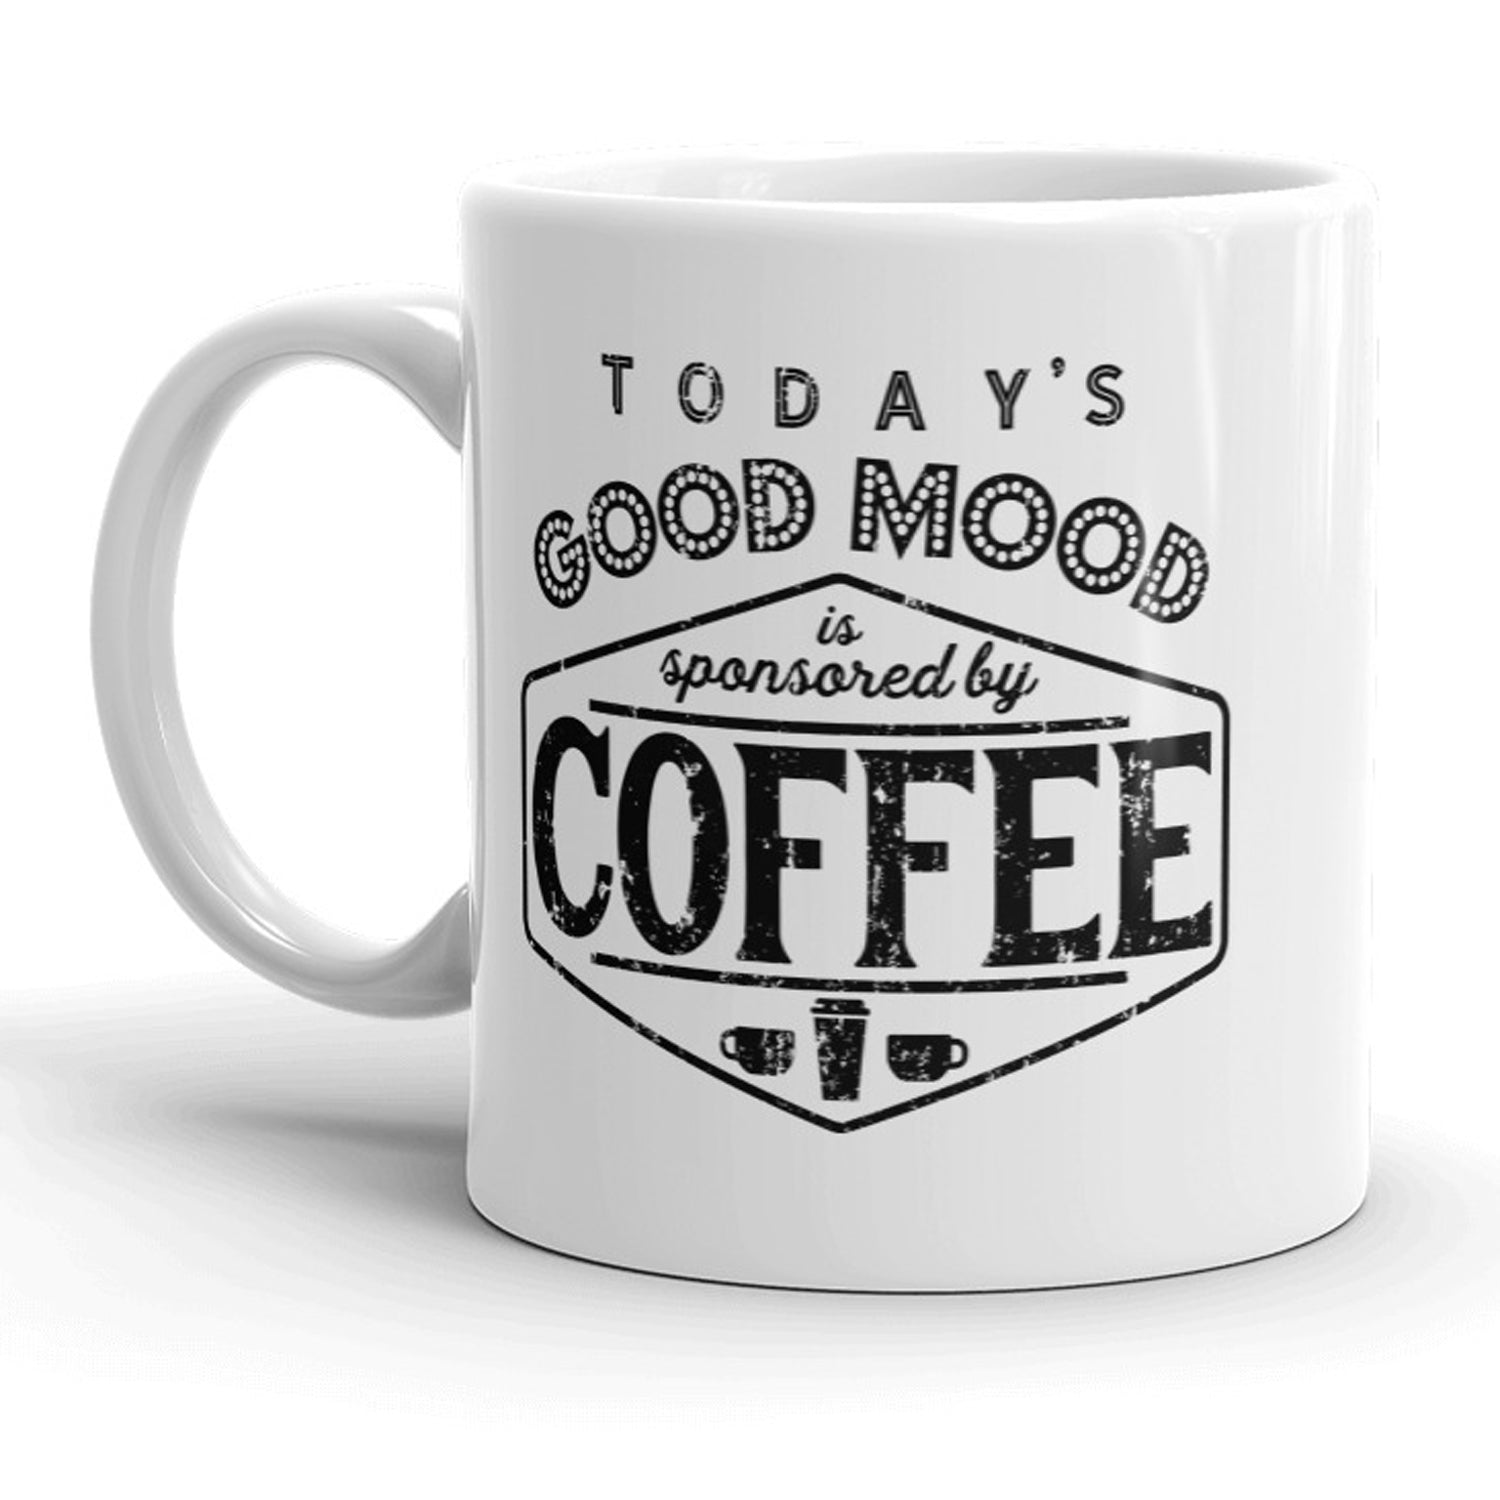 Funny White Today's Good Mood Sponsored By Coffee Coffee Mug Nerdy Sarcastic Tee